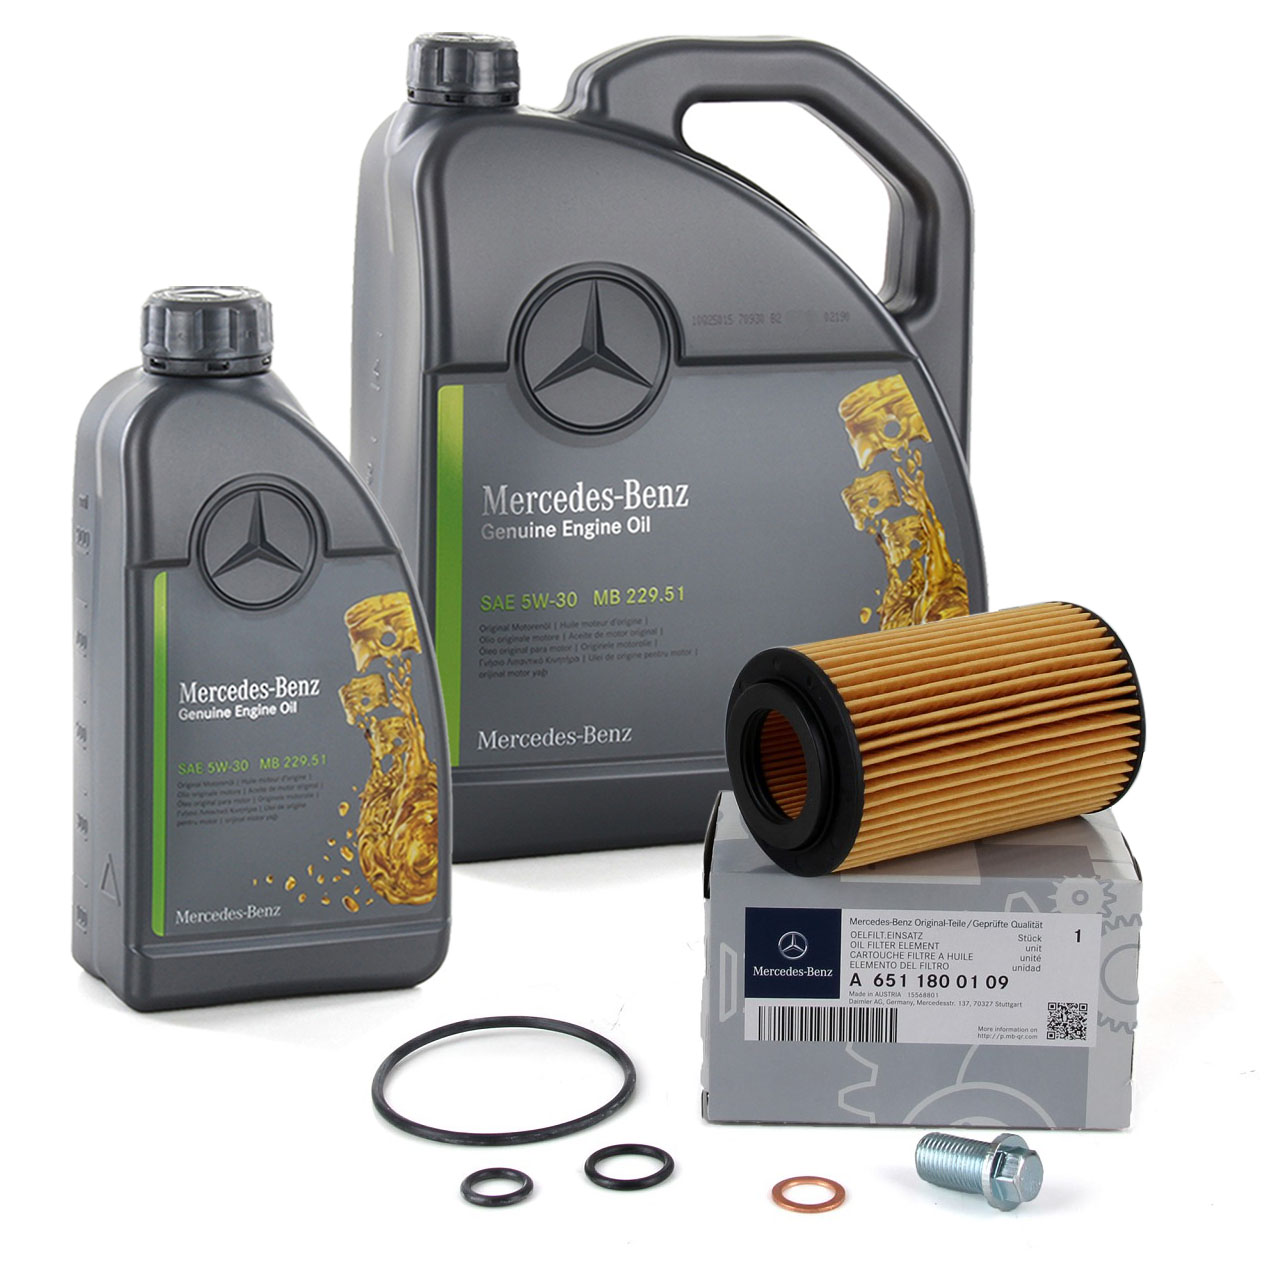 6 Liter ORIGINAL Mercedes-Benz ÖL Motoröl 5W30 MB 229.51 + Ölfilter 6511800109